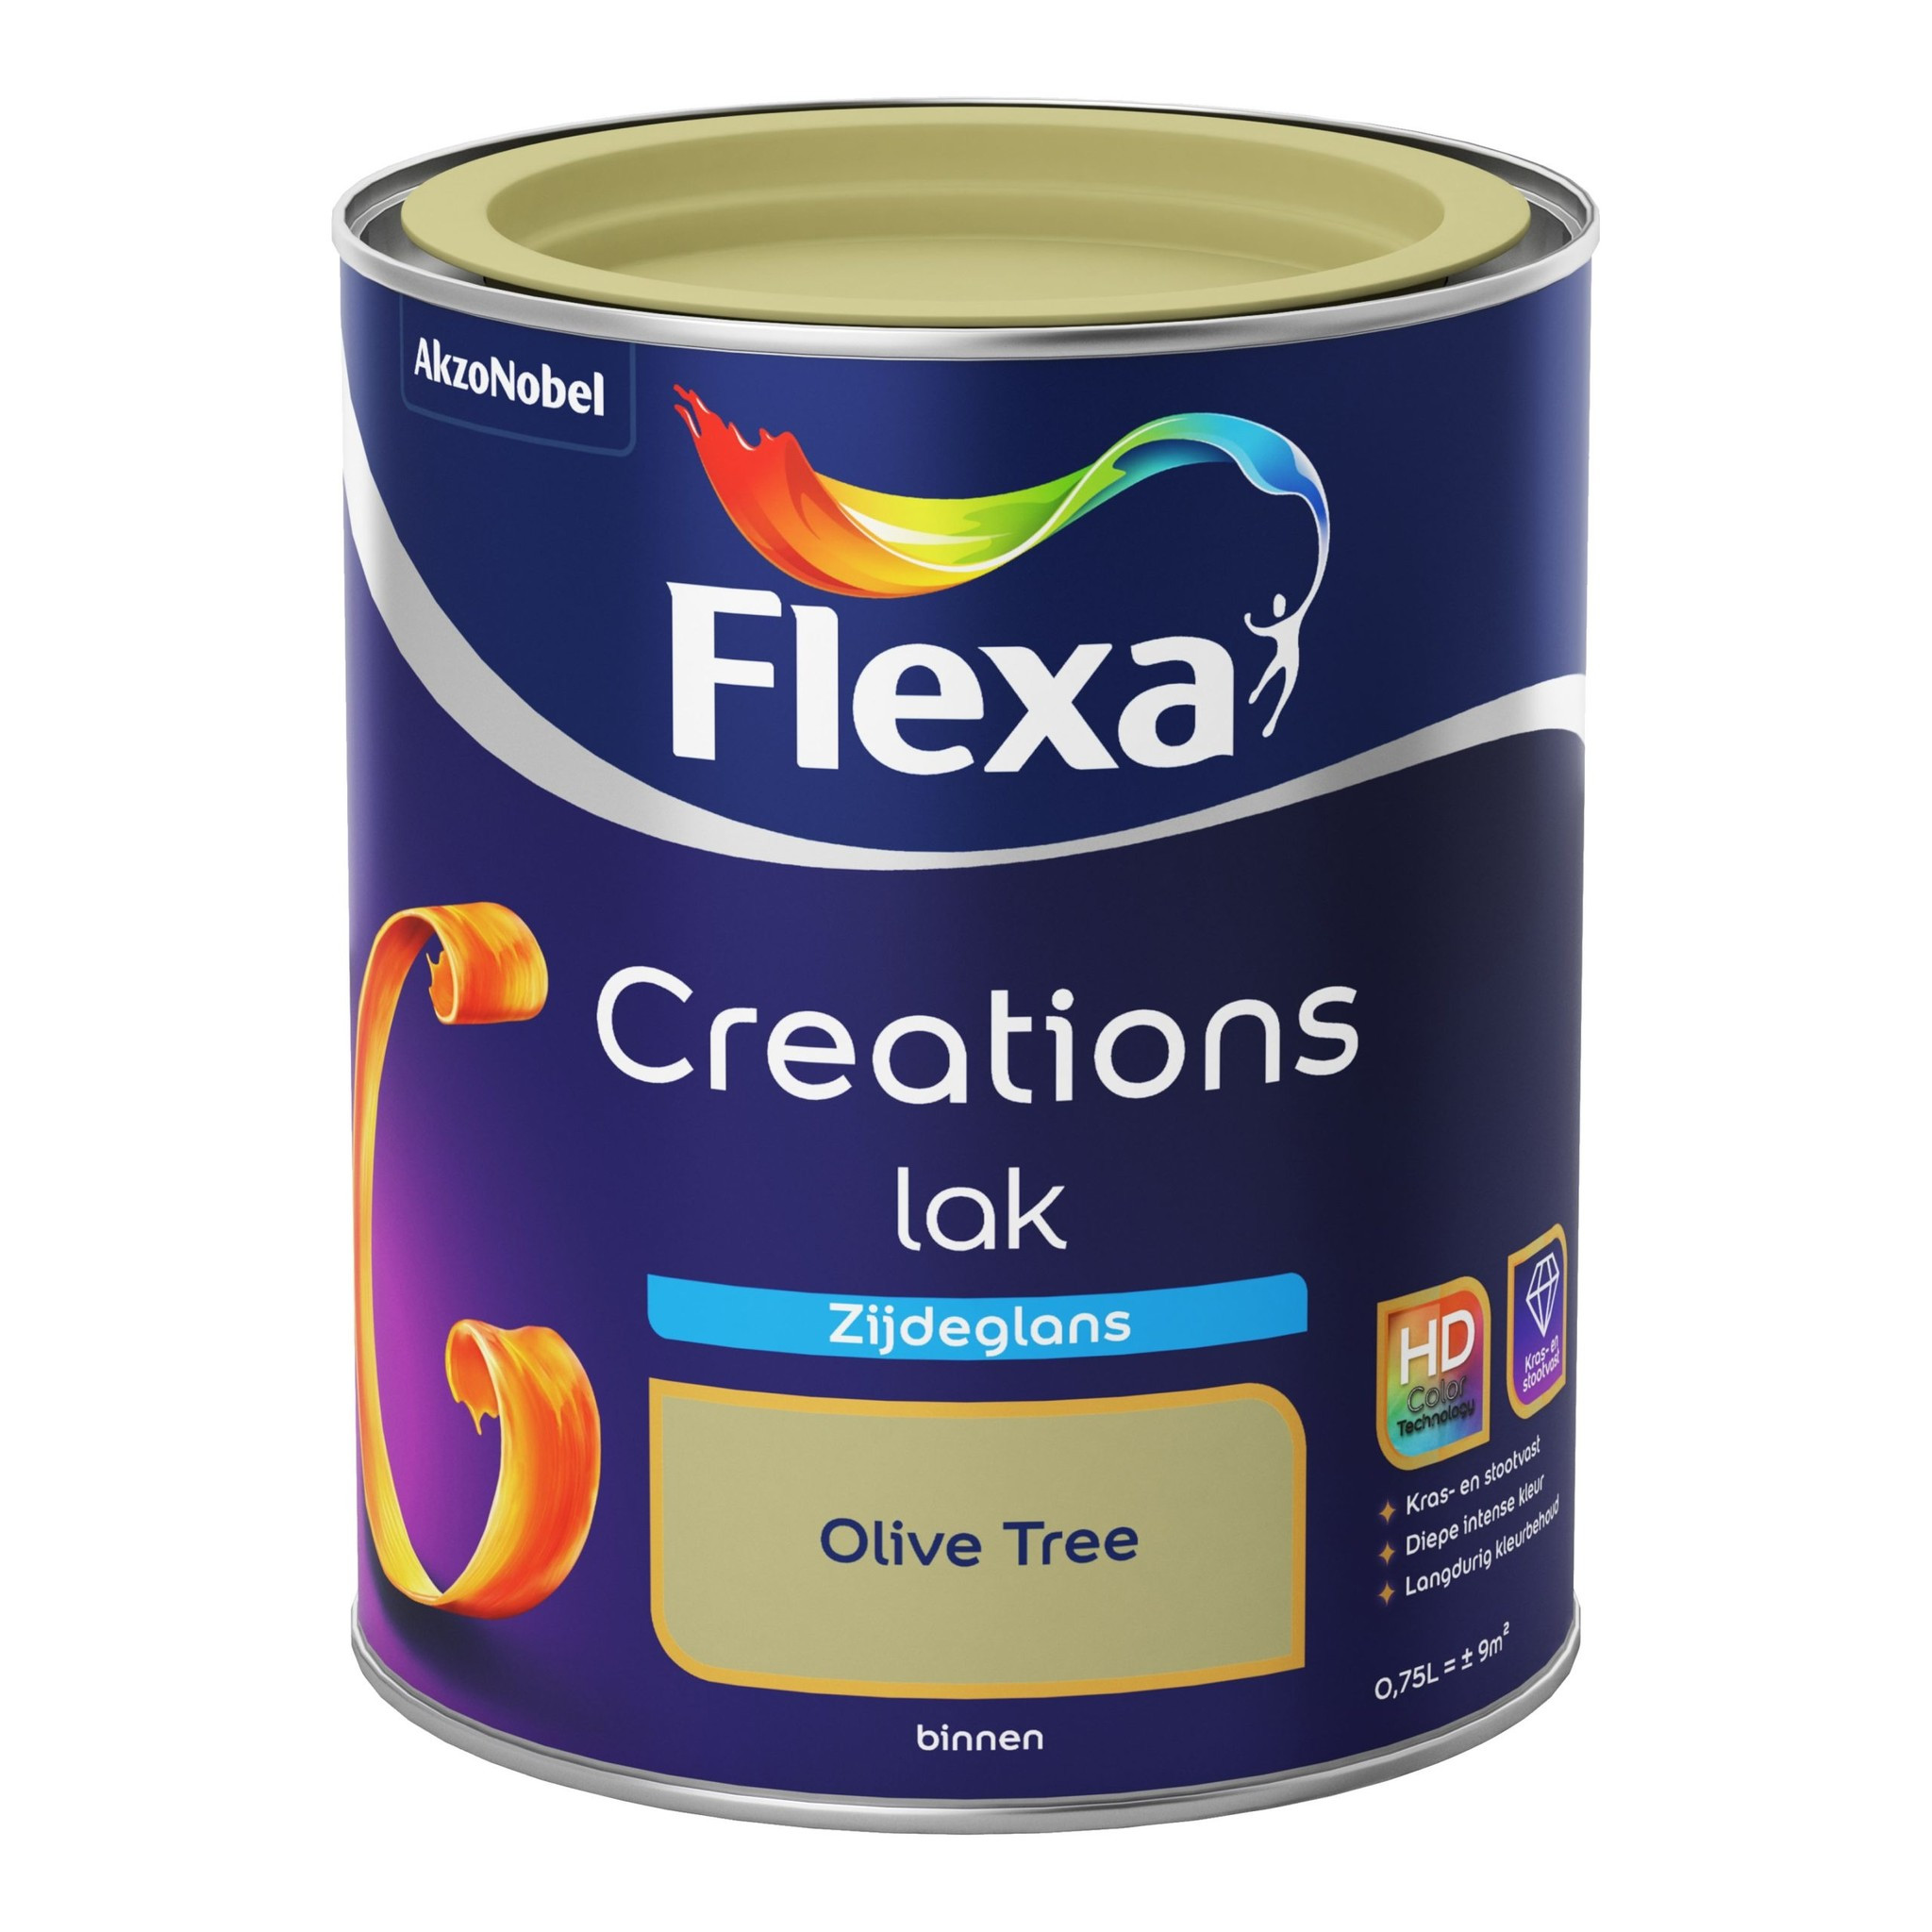 Flexa Creations Lak Zijdeglans - Olive Tree